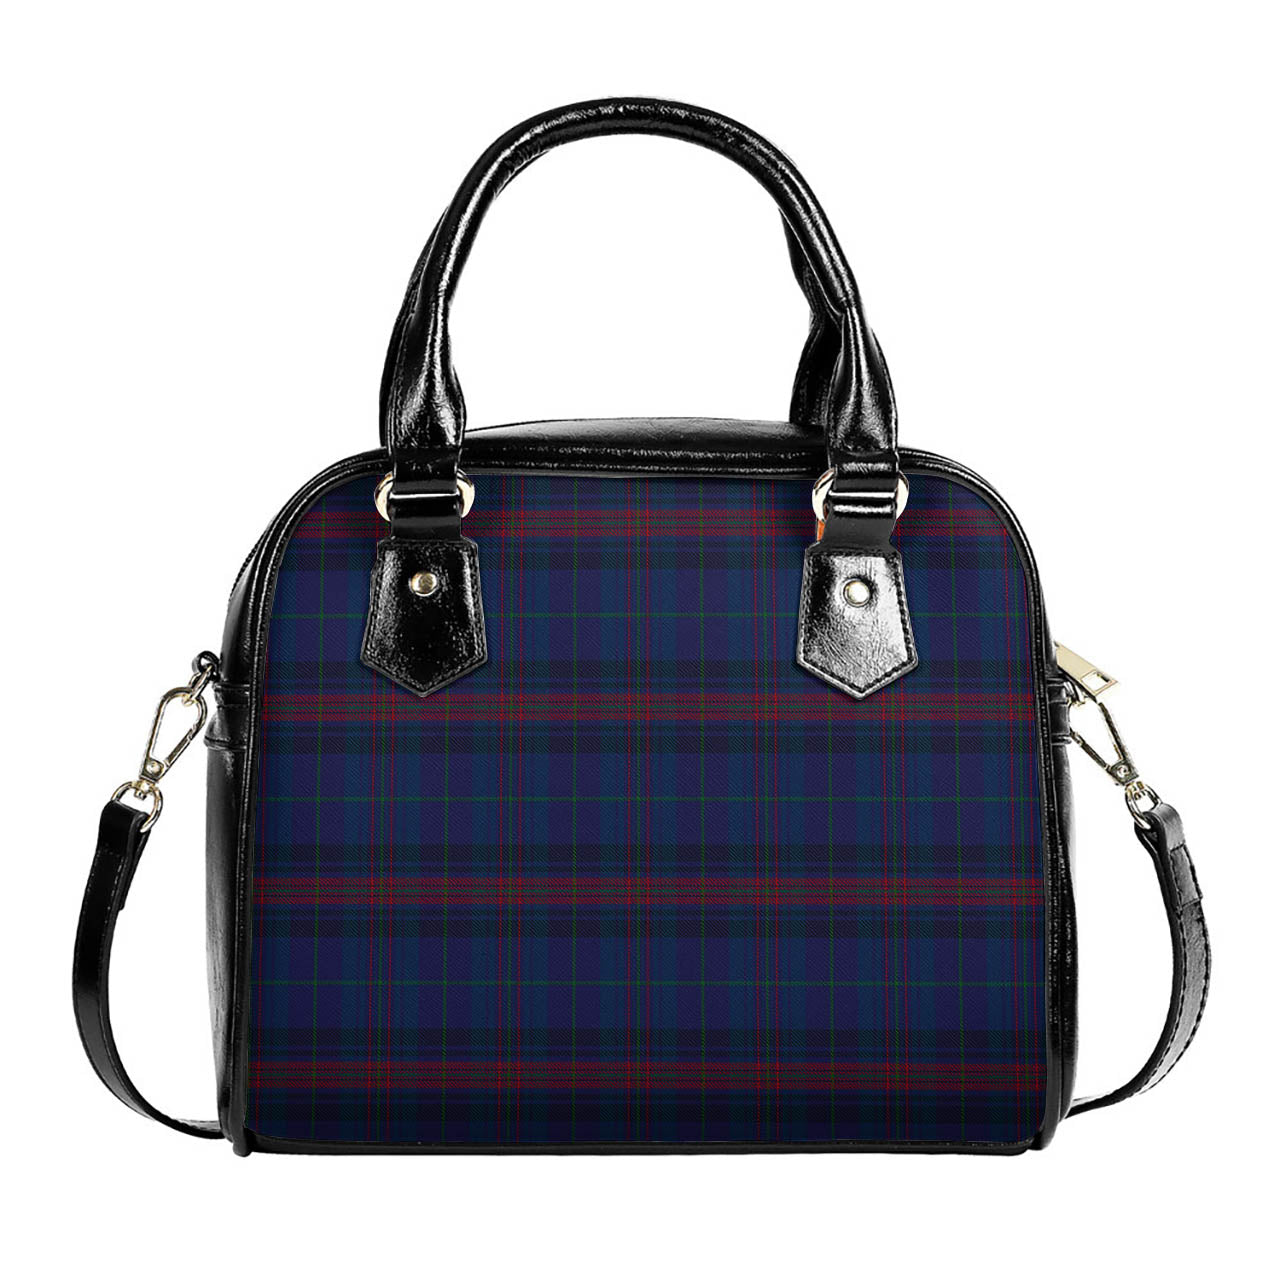 Hughes of Wales Tartan Shoulder Handbags One Size 6*25*22 cm - Tartanvibesclothing